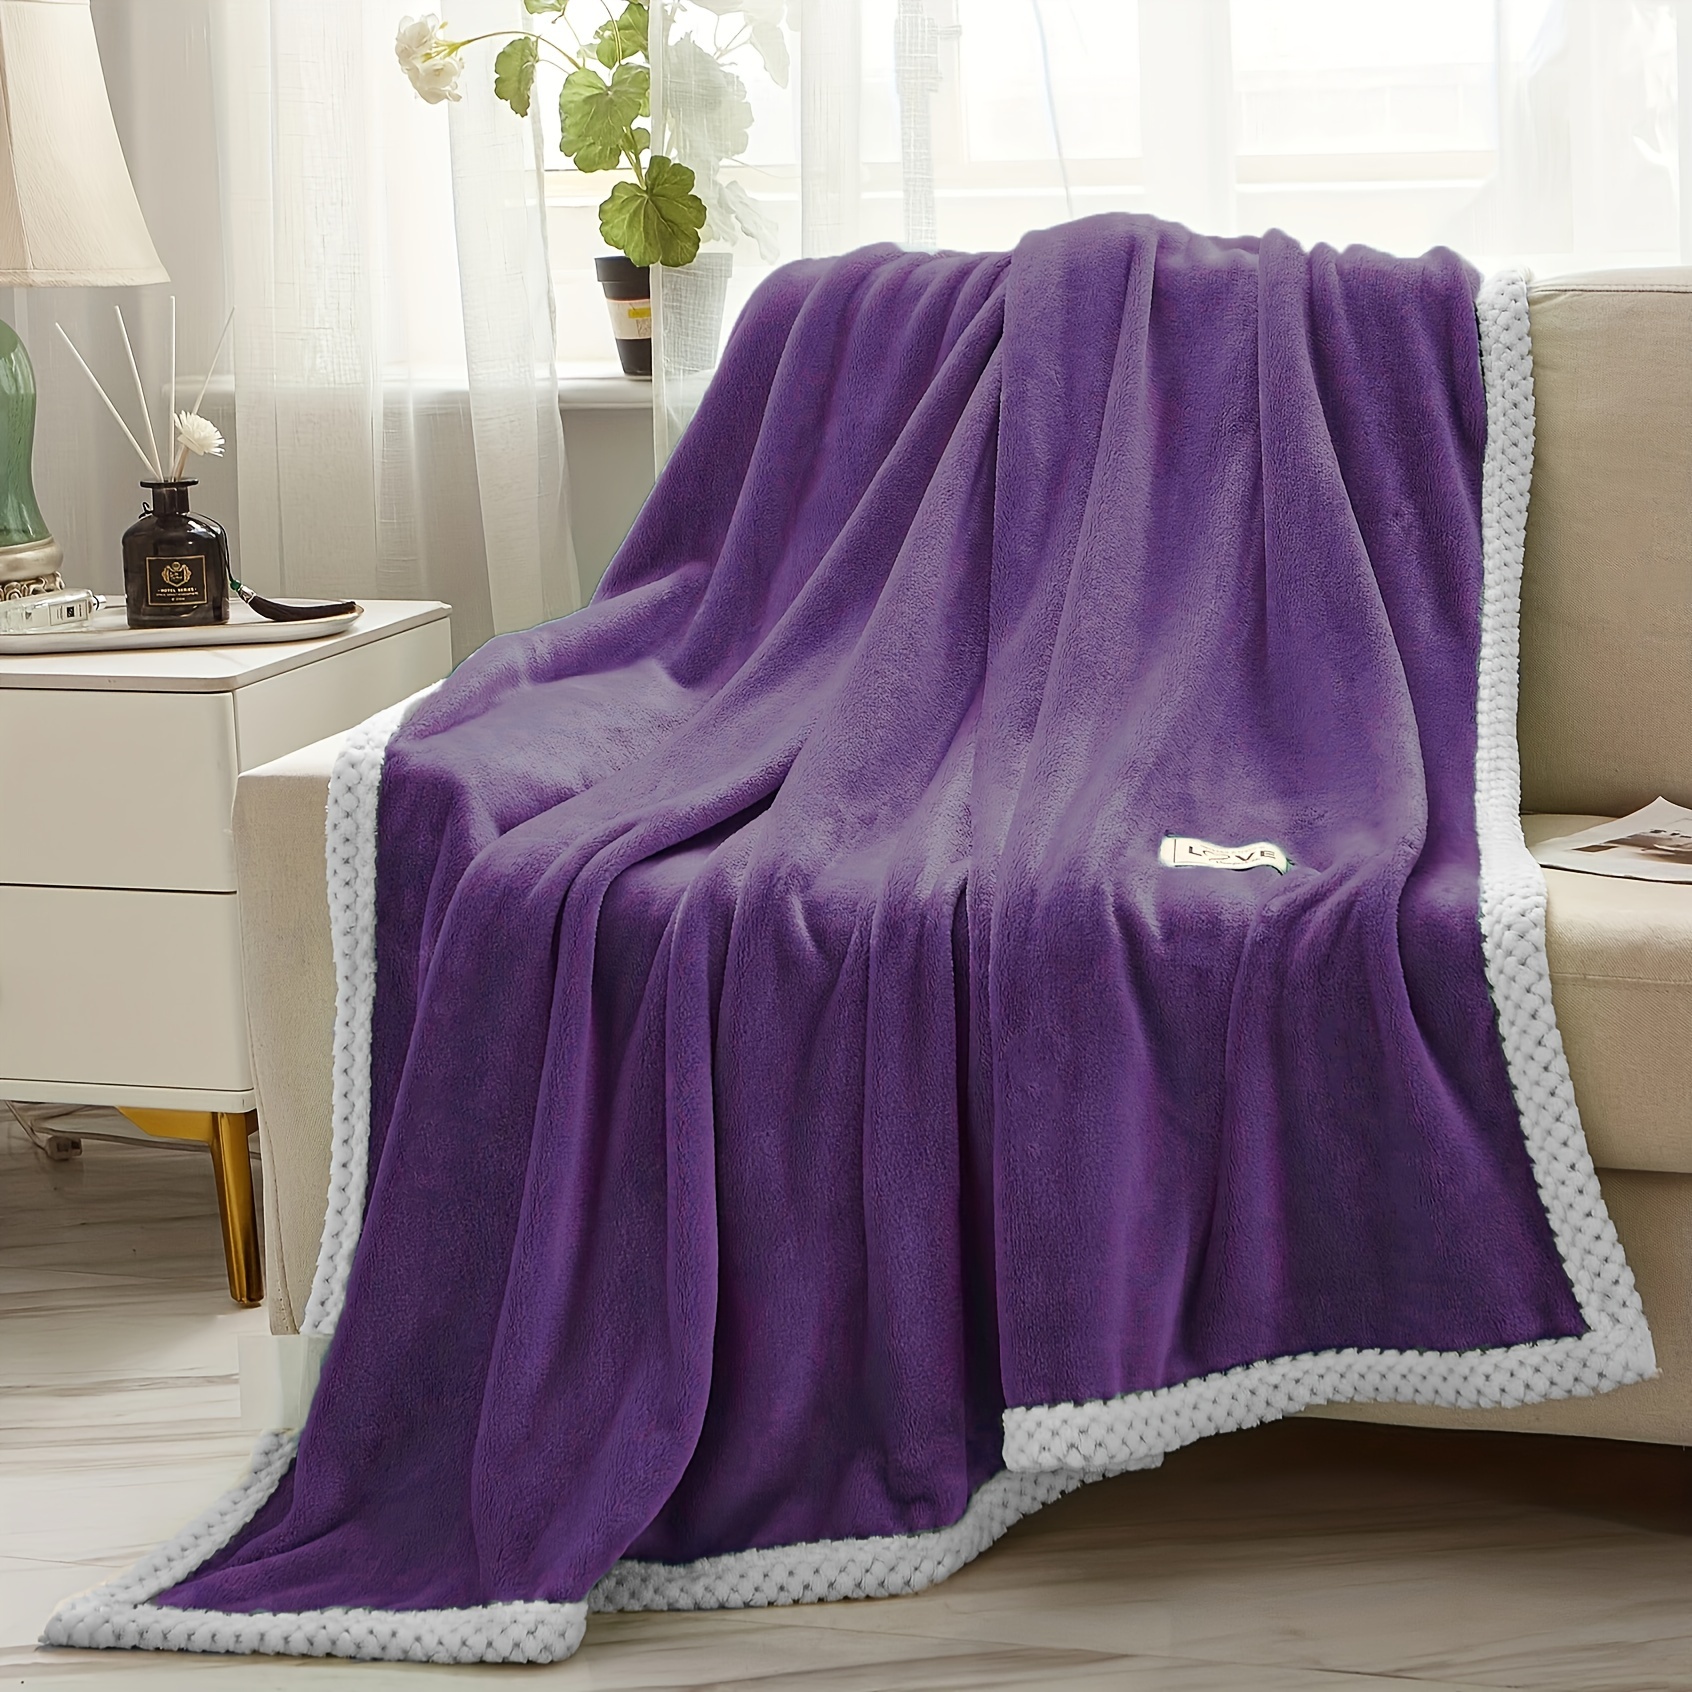 Blanket Texture Soft Purple Violet Velvet Background Fold Shine Warm Stock  Image - Image of luxury, fold: 73325793